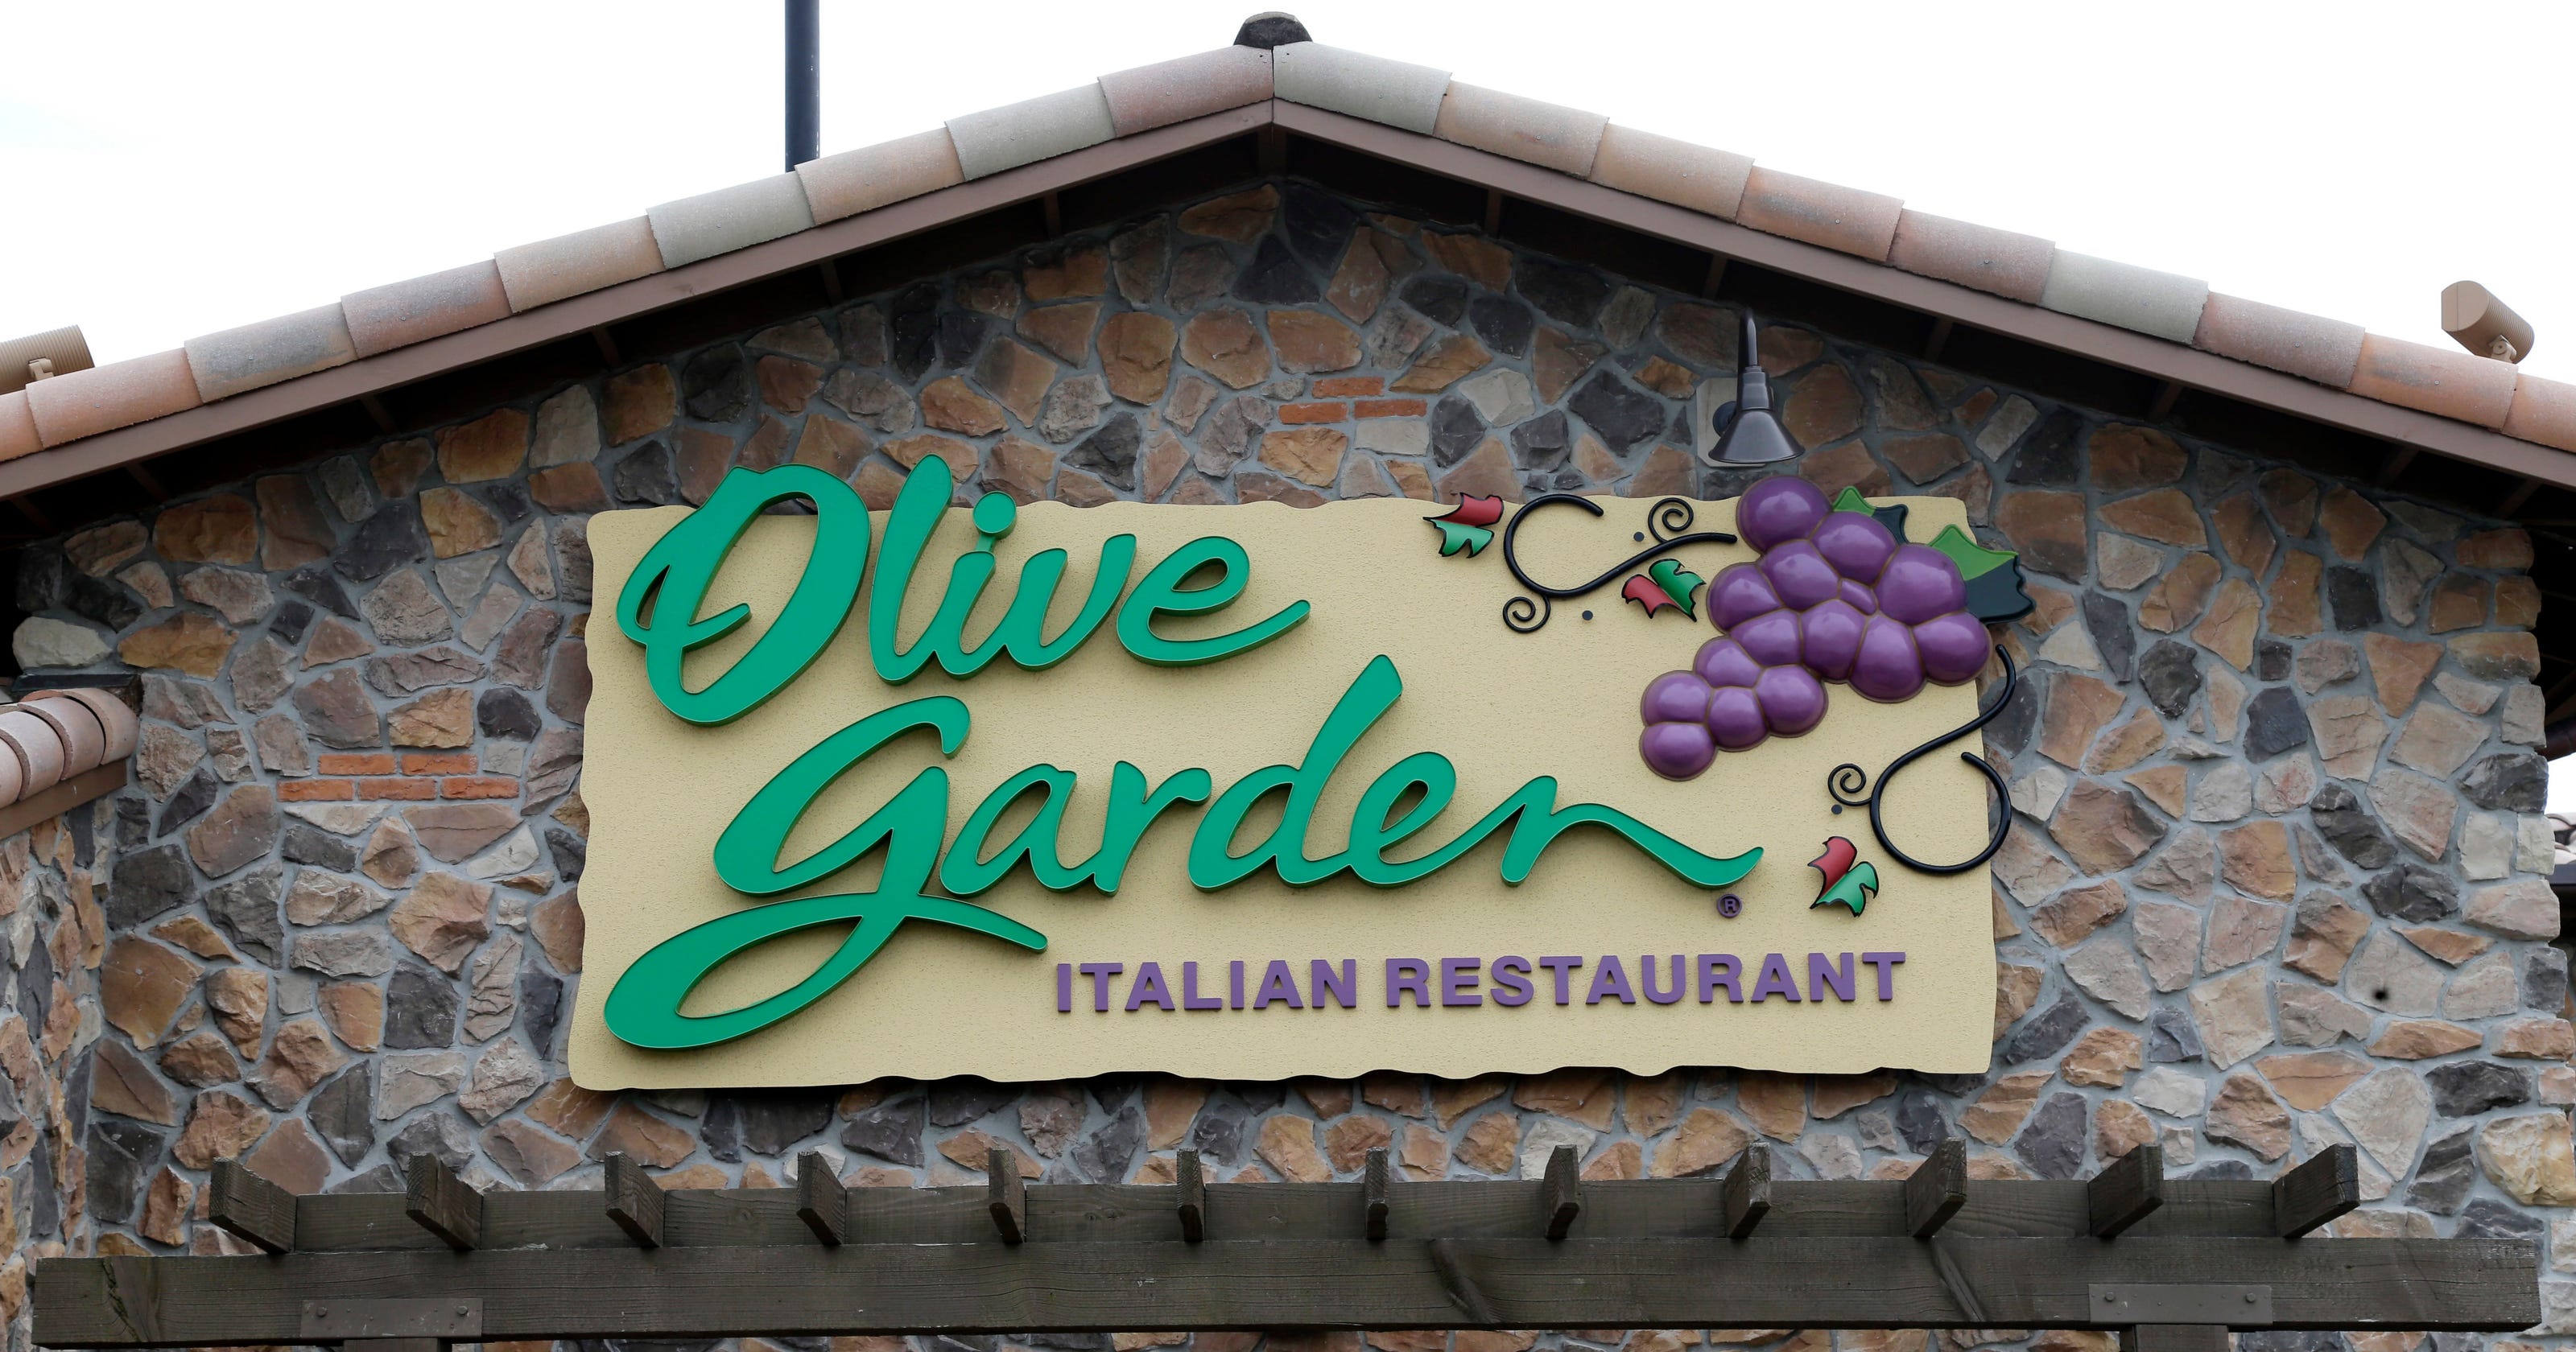 Menomonee Falls Olive Garden To Open Jan 27 In White Stone Station